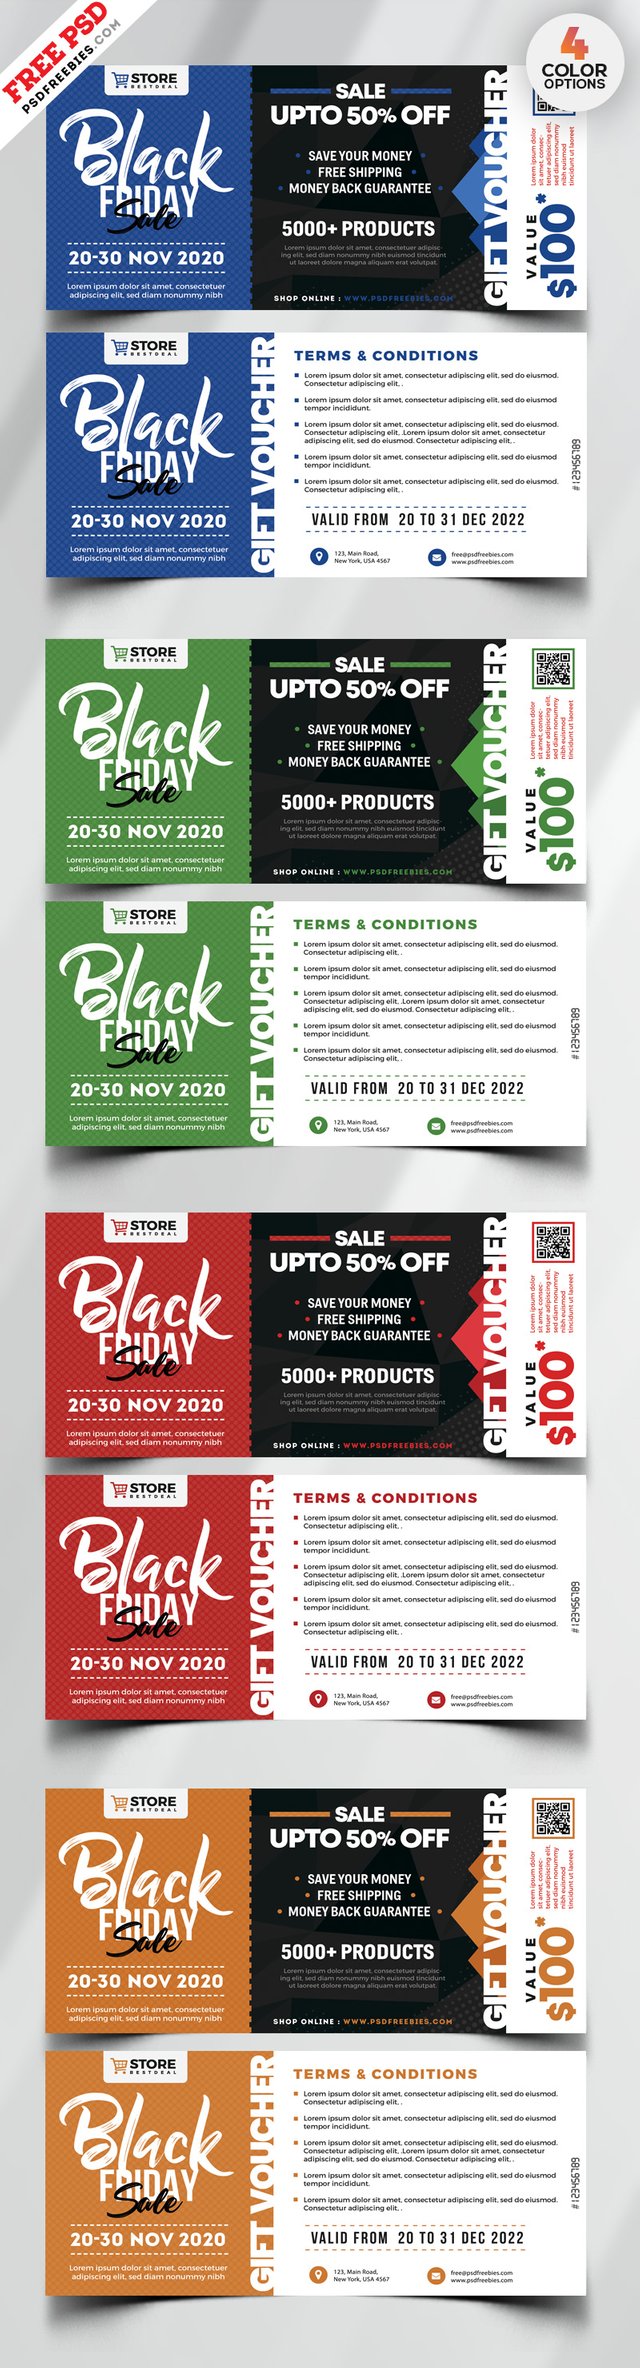 Black-Friday-Sale-Voucher-Design-PSD-Preview.jpg